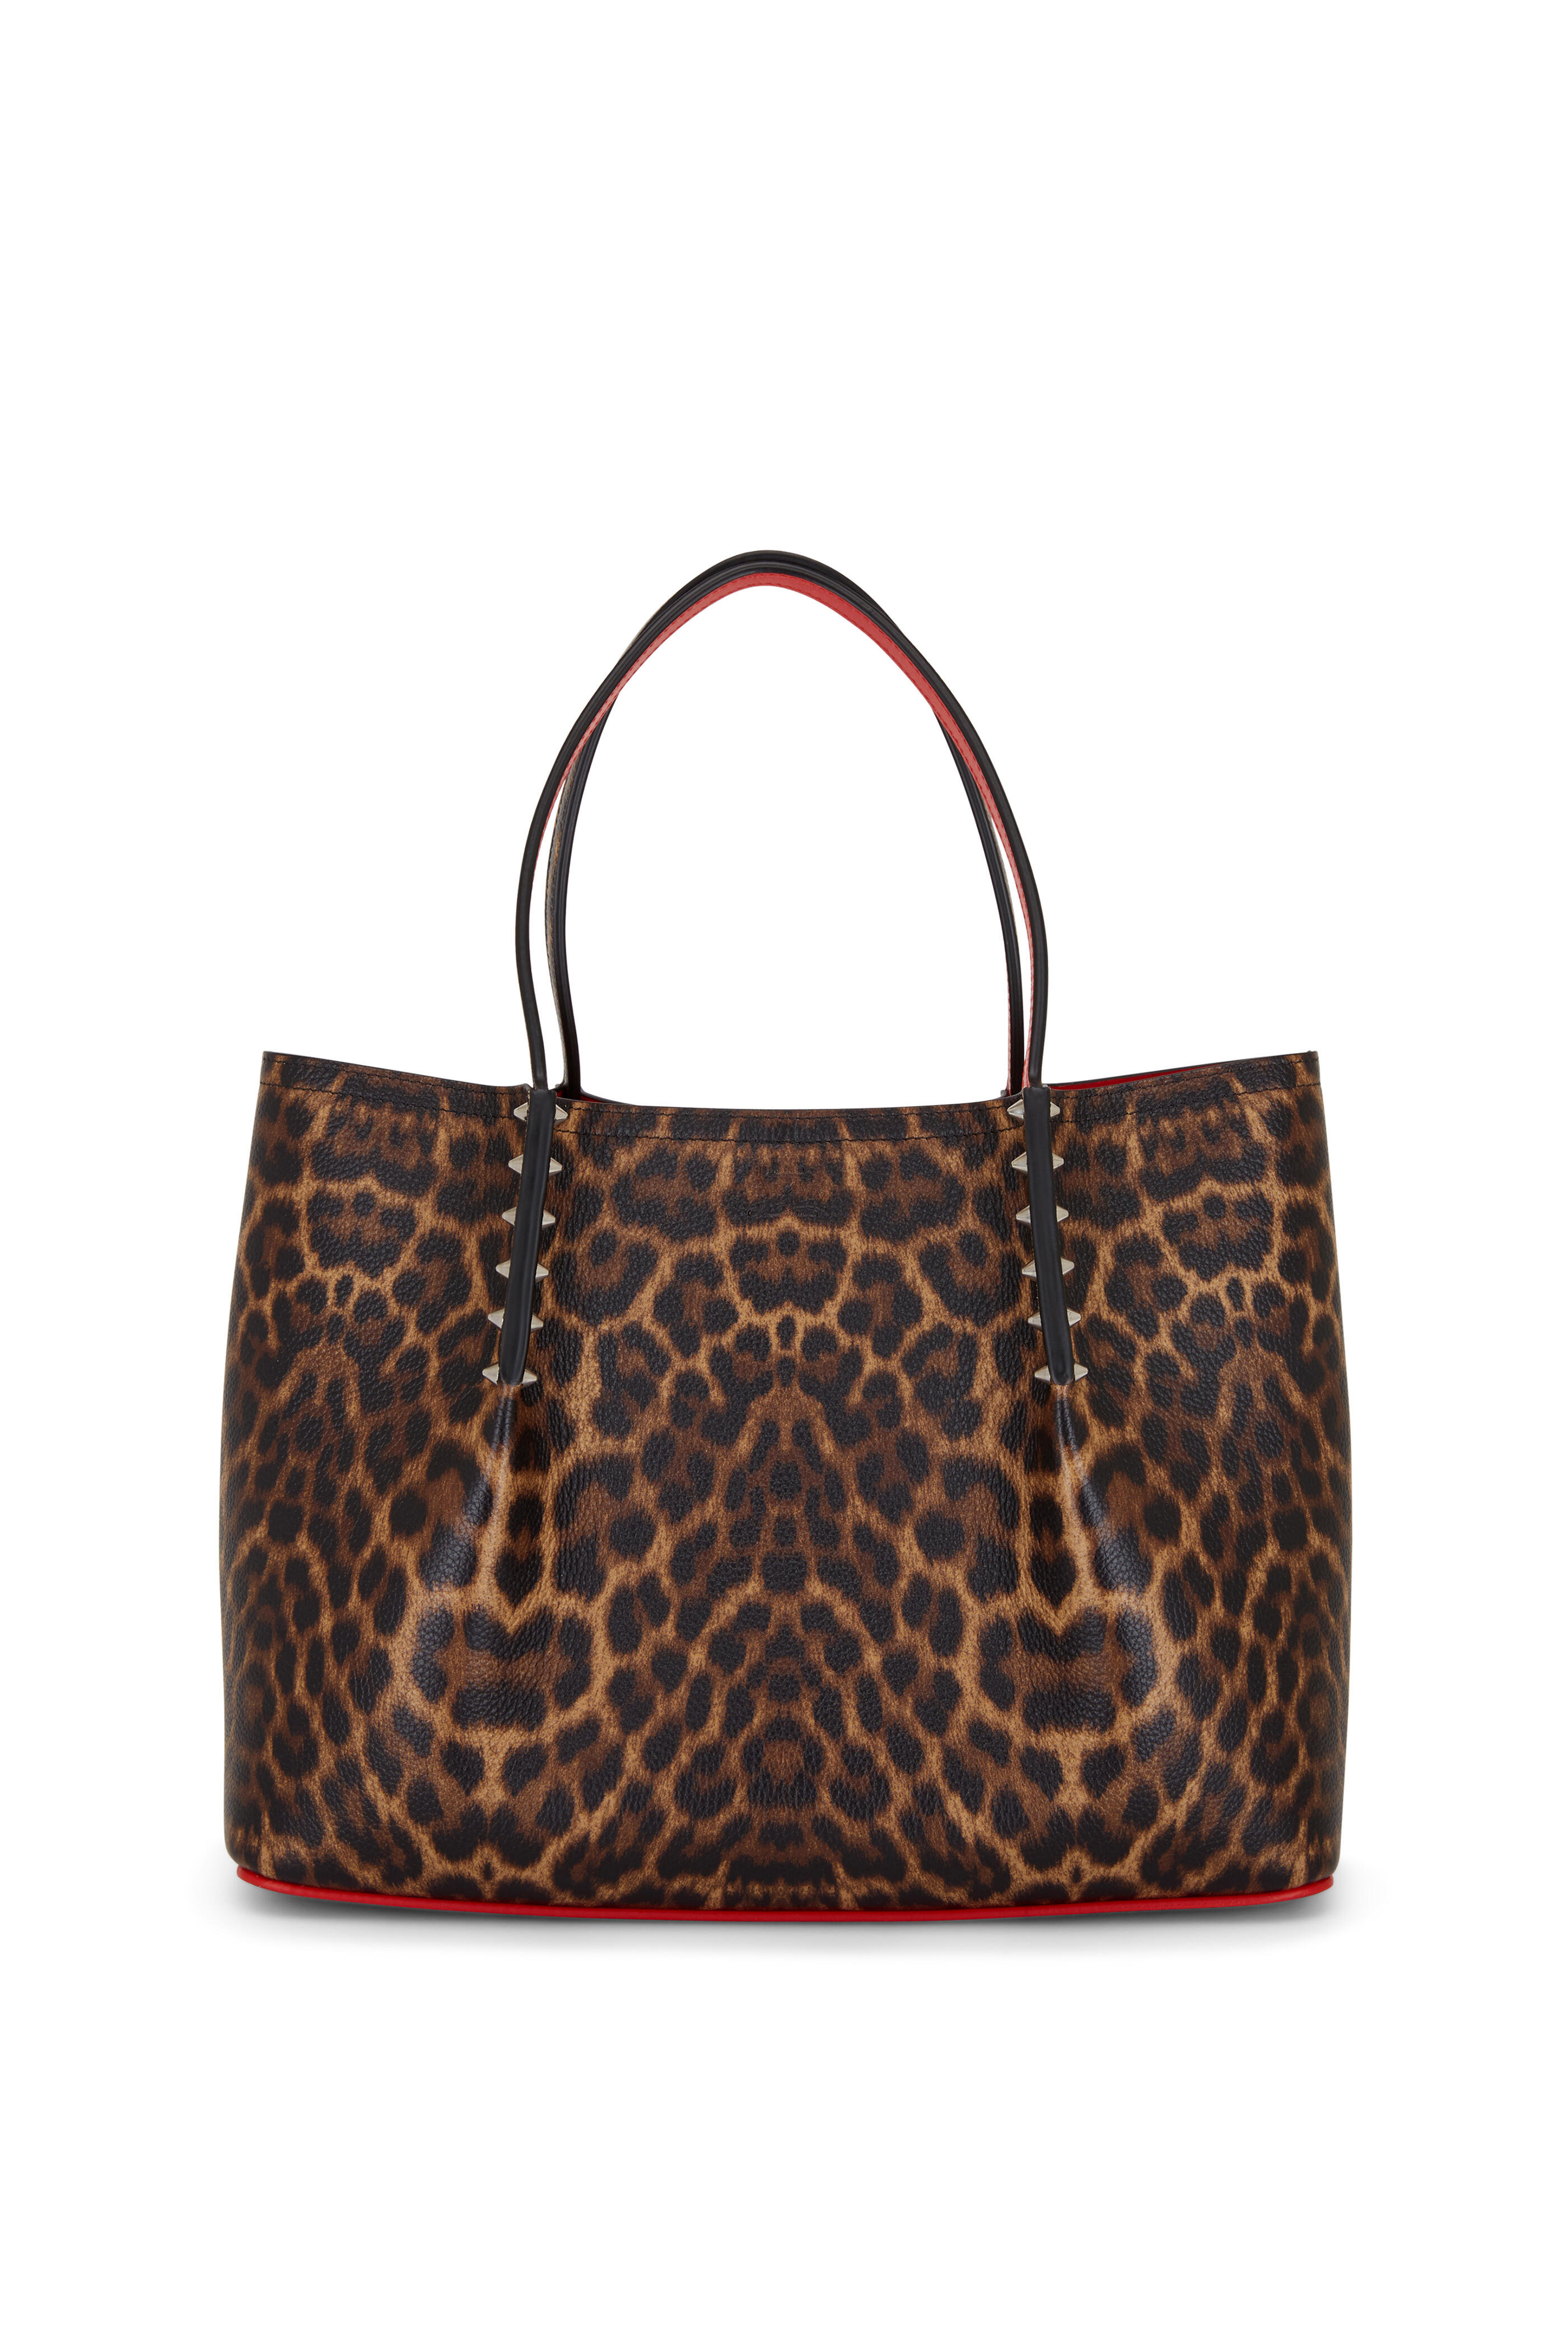 Christian Louboutin - Cabarock Leopard Leather Large Tote Bag